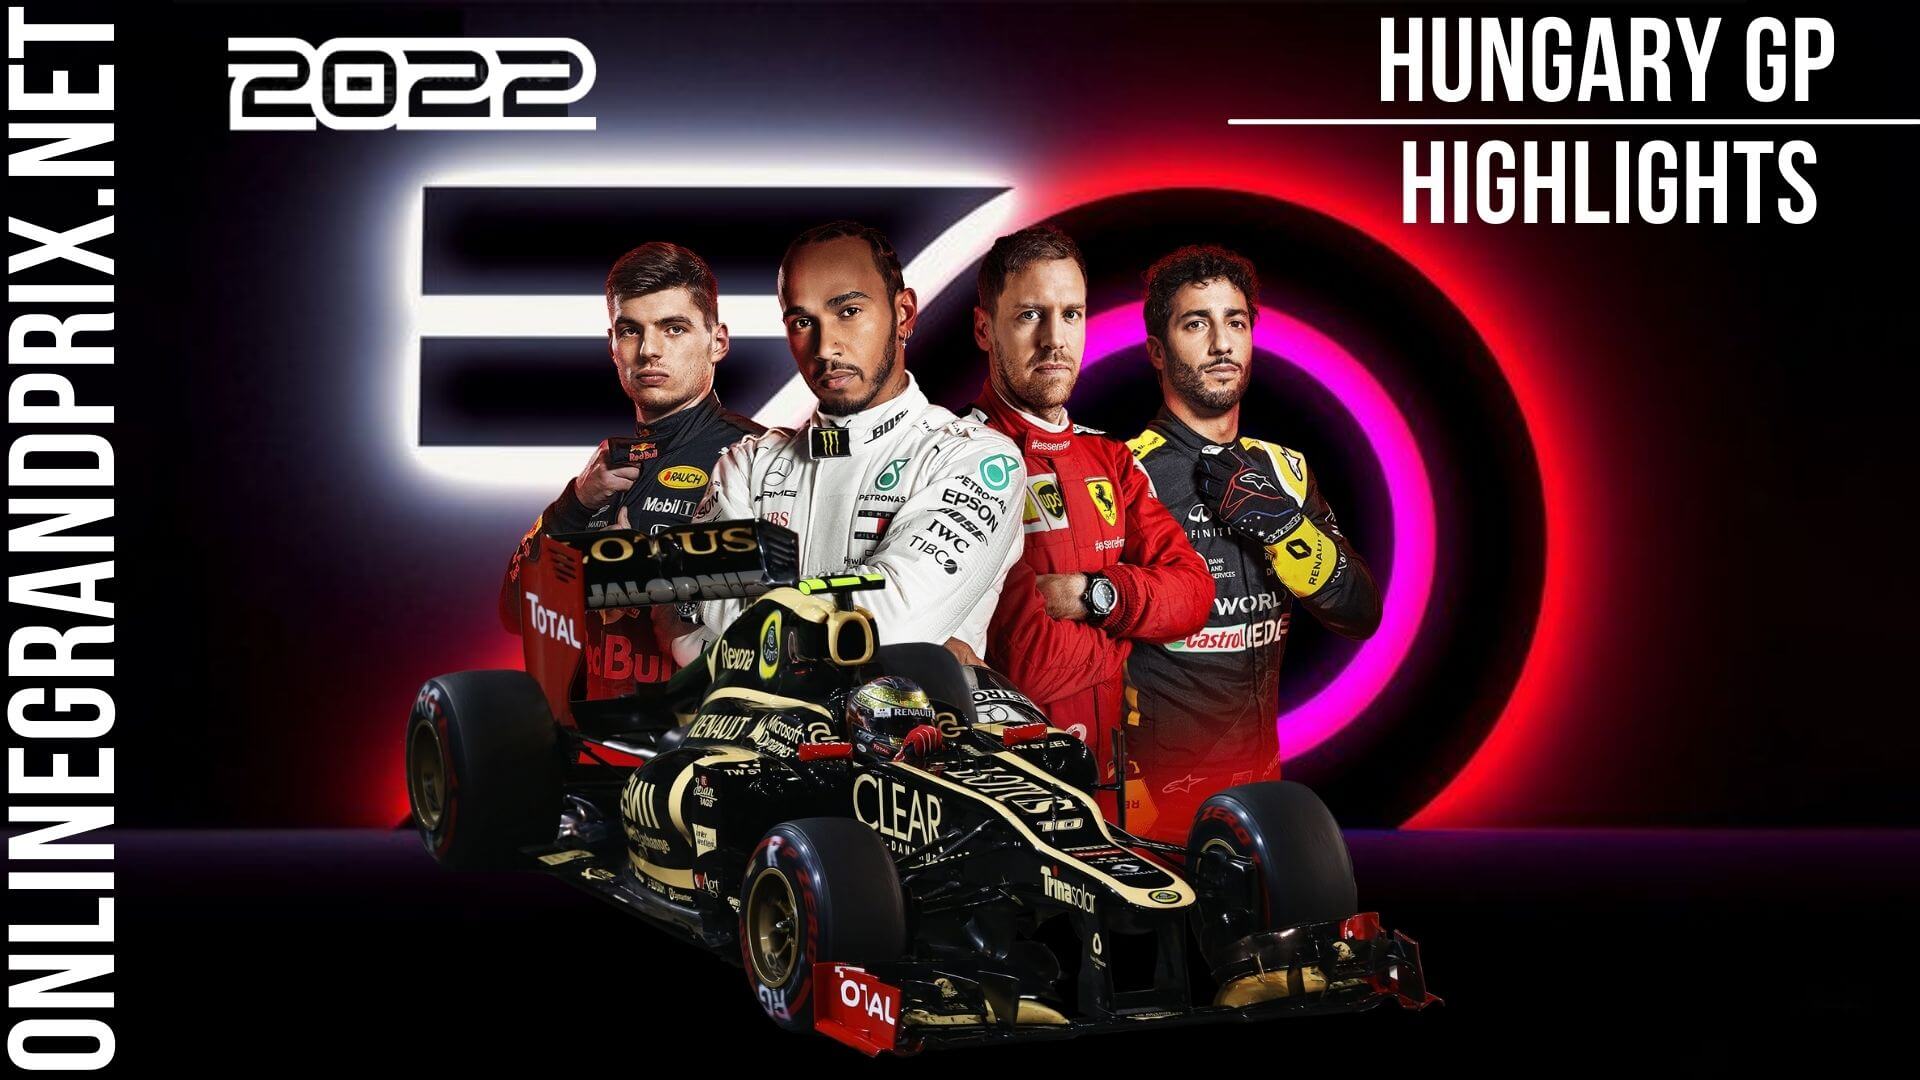 Hungary GP F1 Highlights 2022